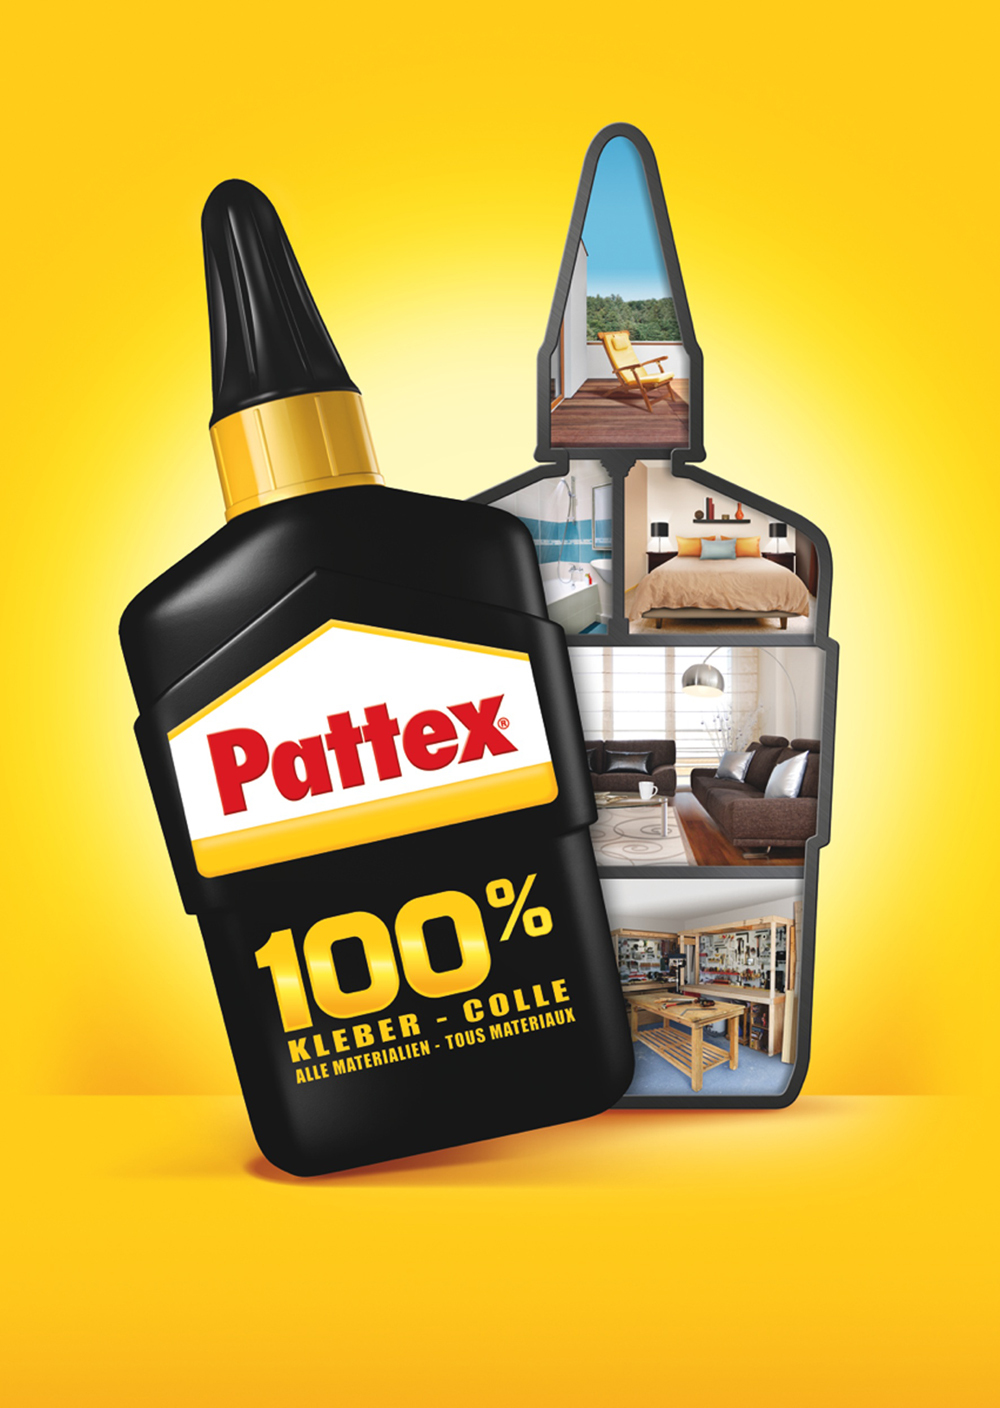 Pattex 100%